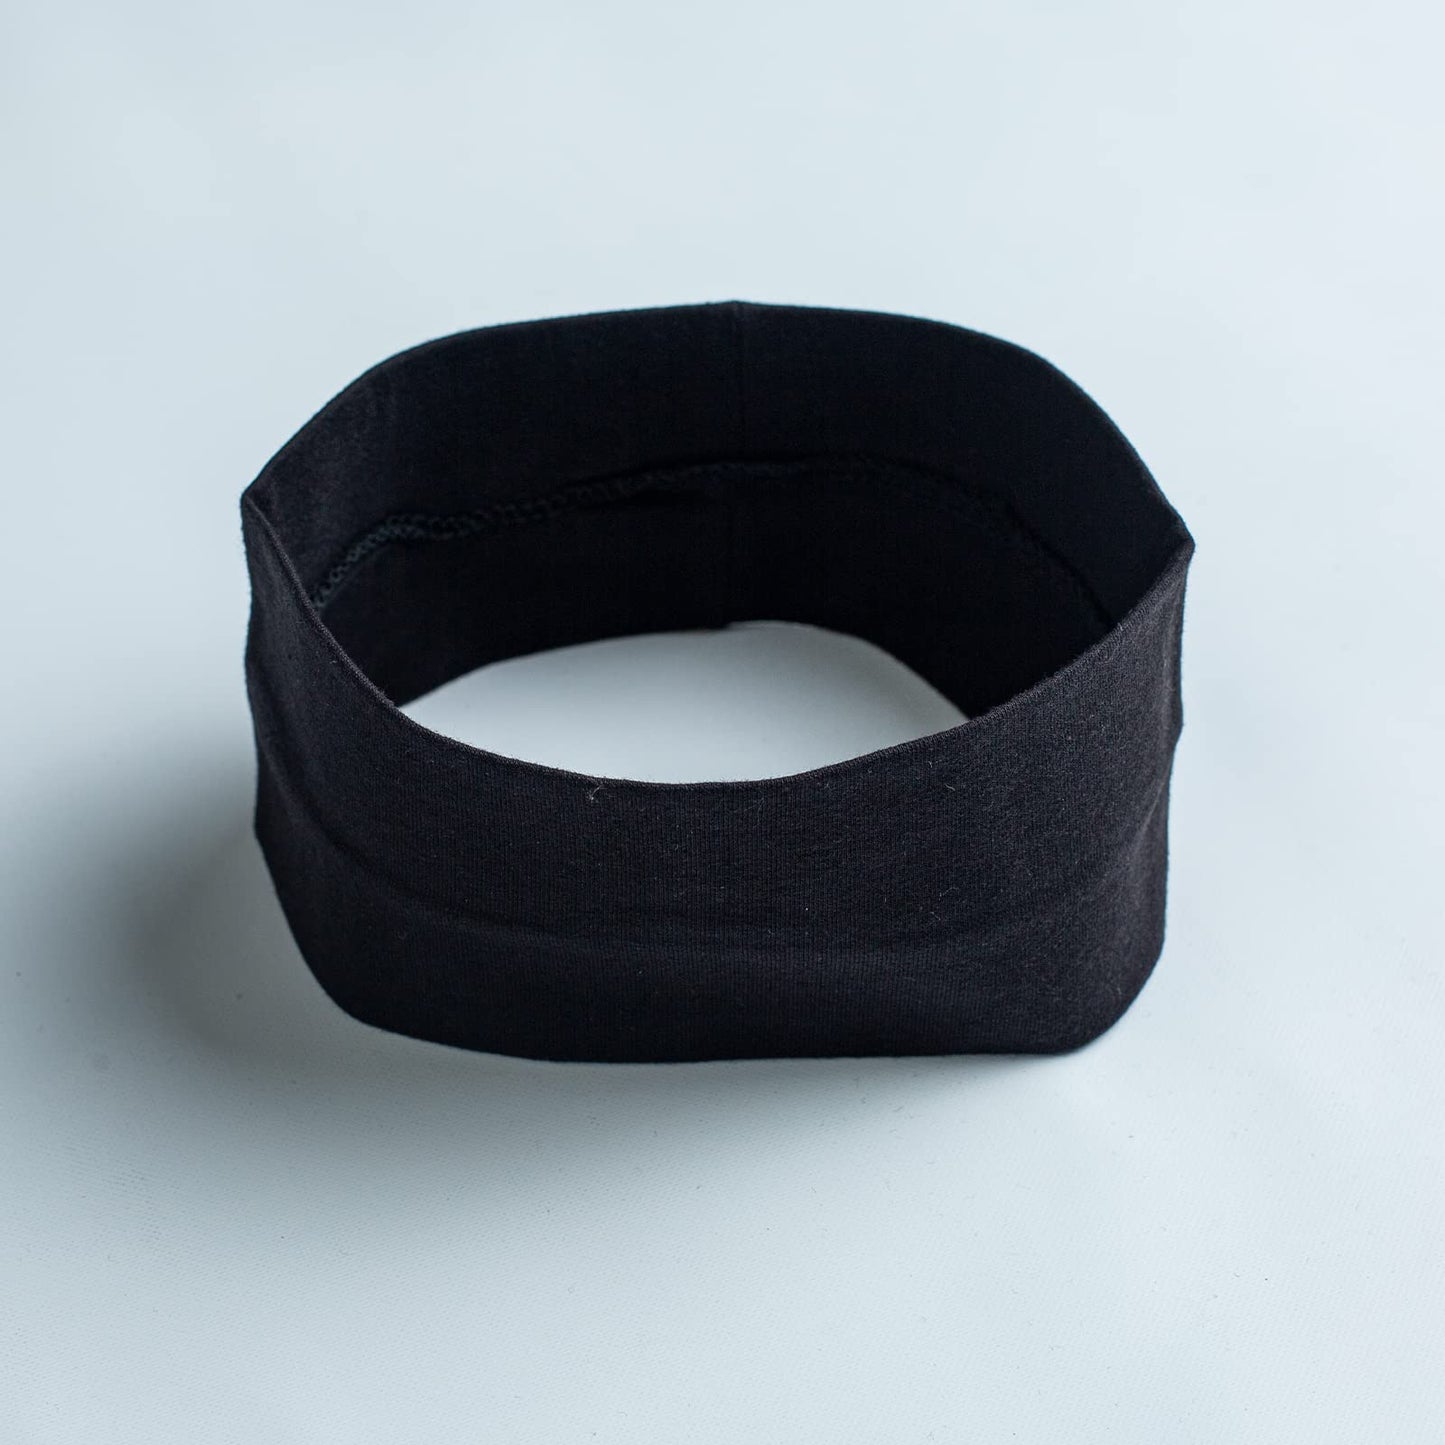 MLMOMVME 6 Pcs Black Headbands for Women Hair Cotton Headband Non-slip Stretchy Elastic Head Wrap Holder Hair Accessories